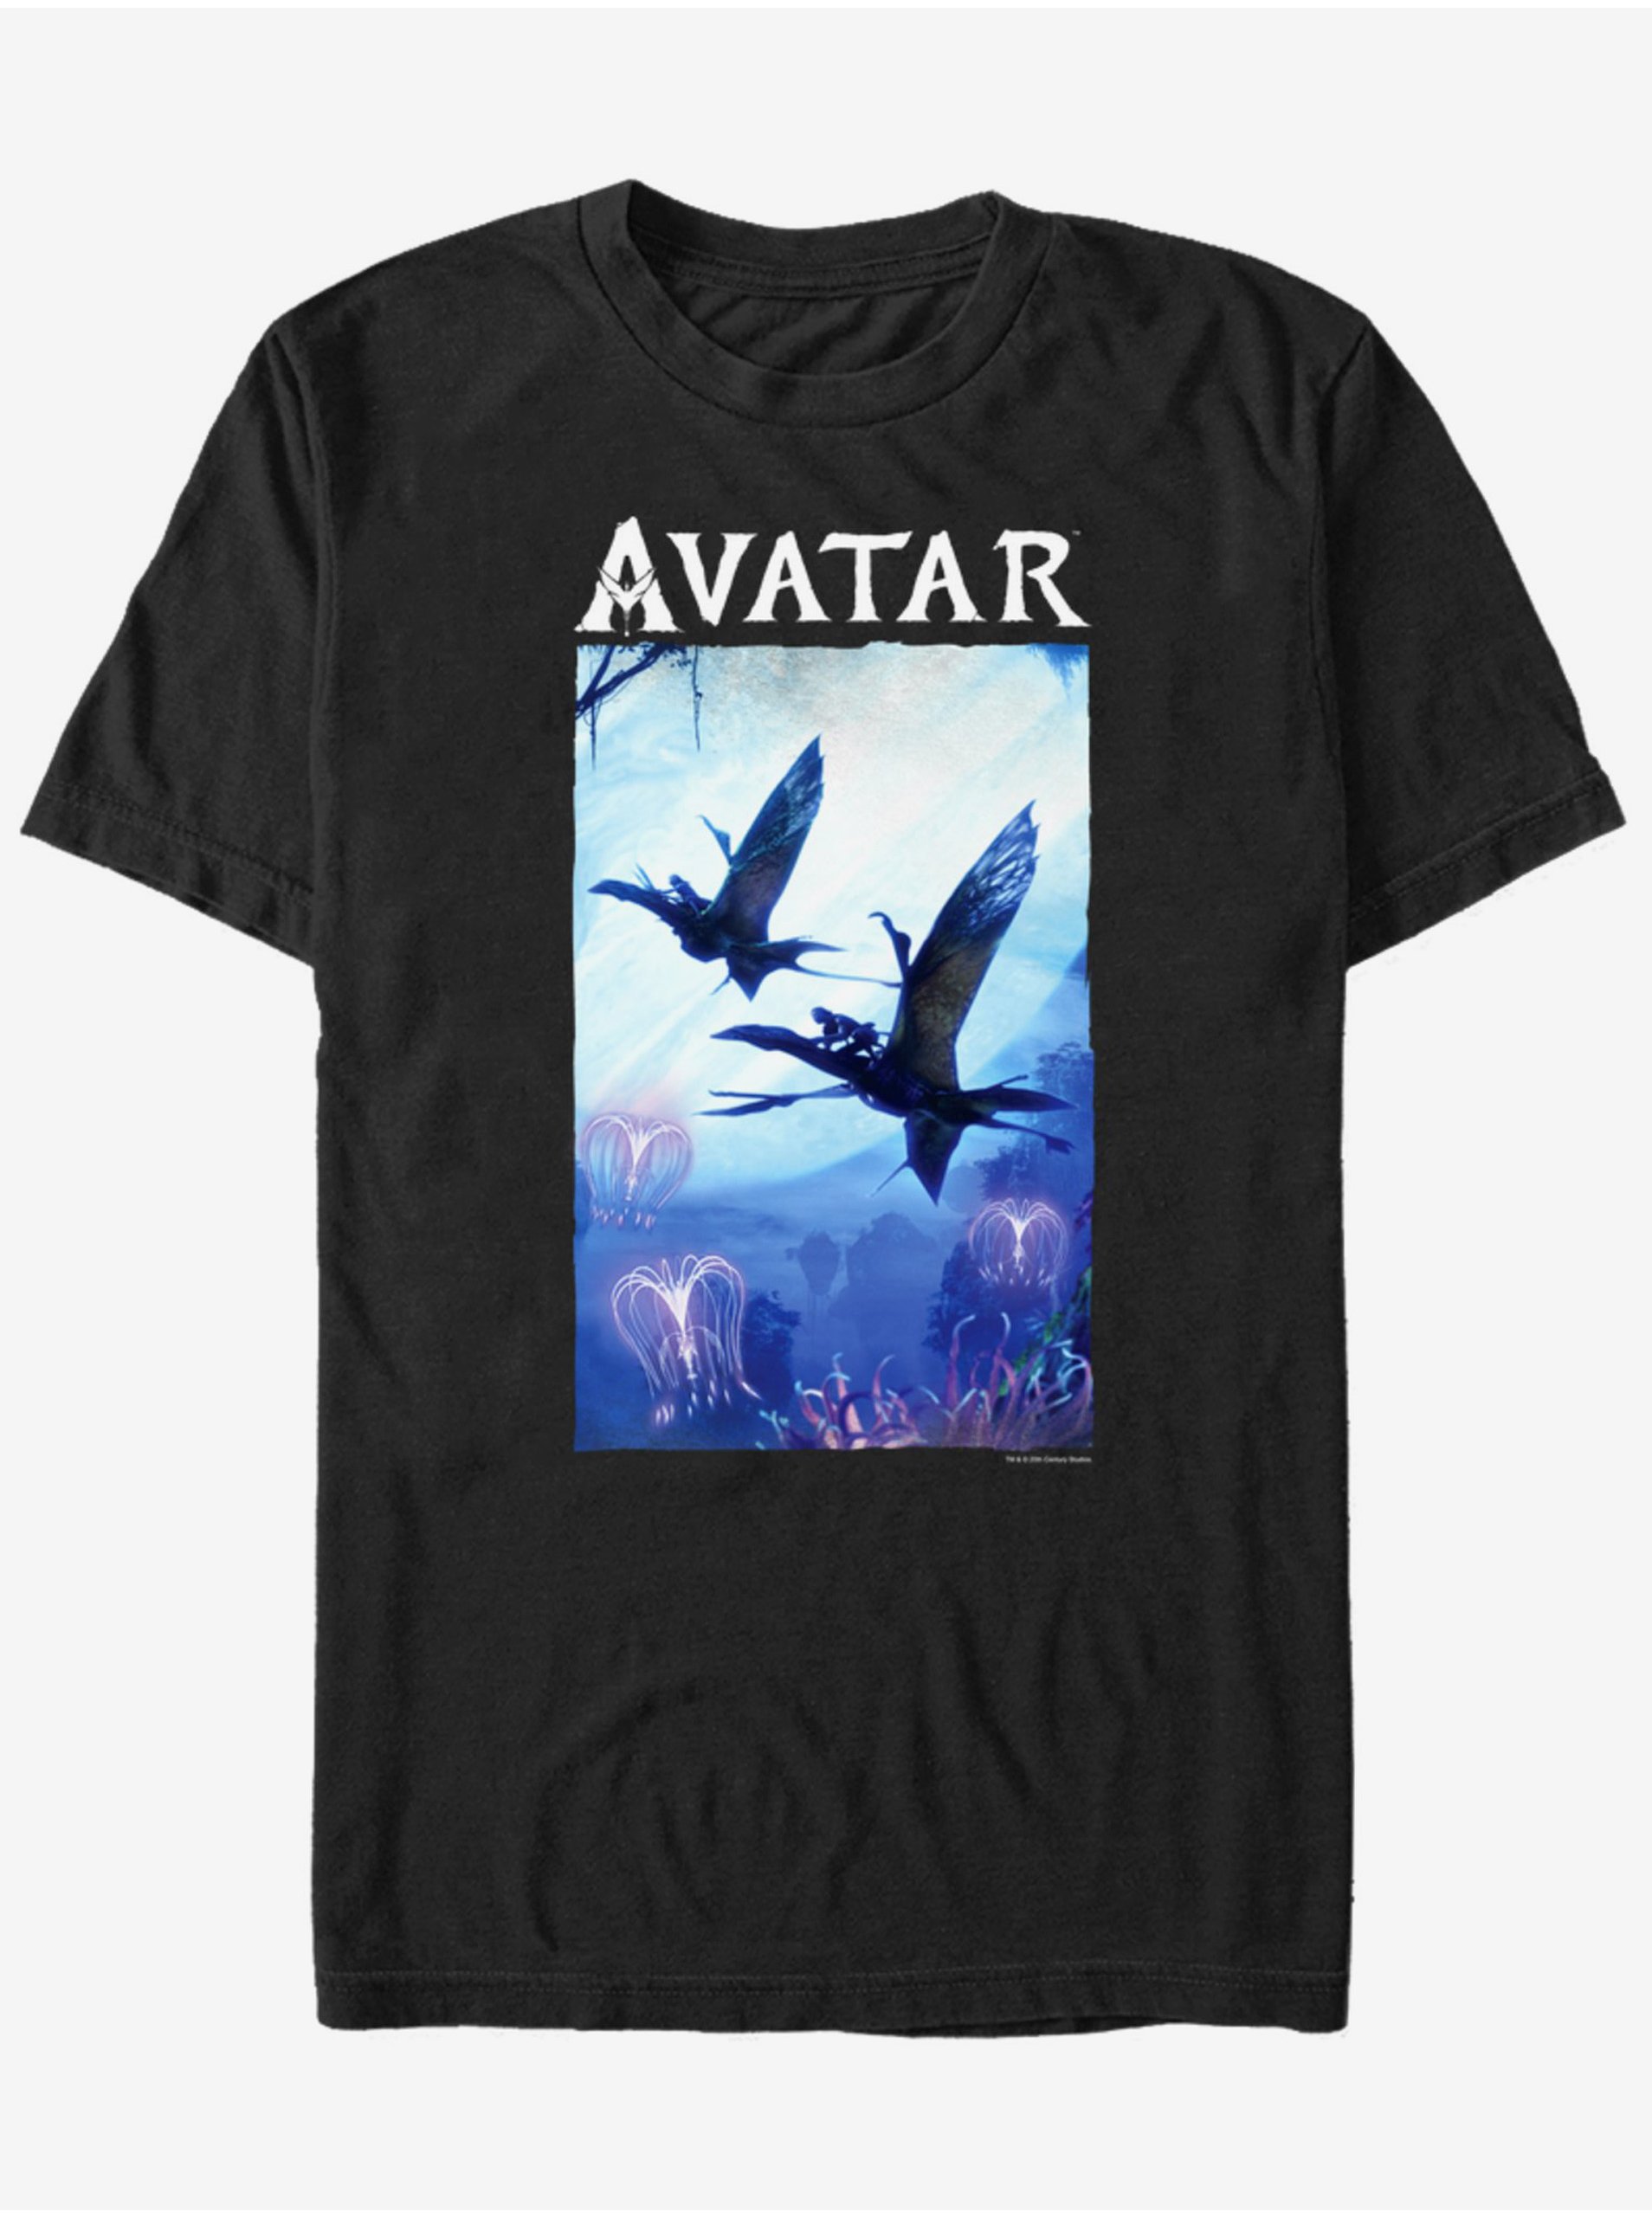 Lacno Čas ve vzduchu Avatar 2 ZOOT.FAN Twentieth Century Fox - unisex tričko